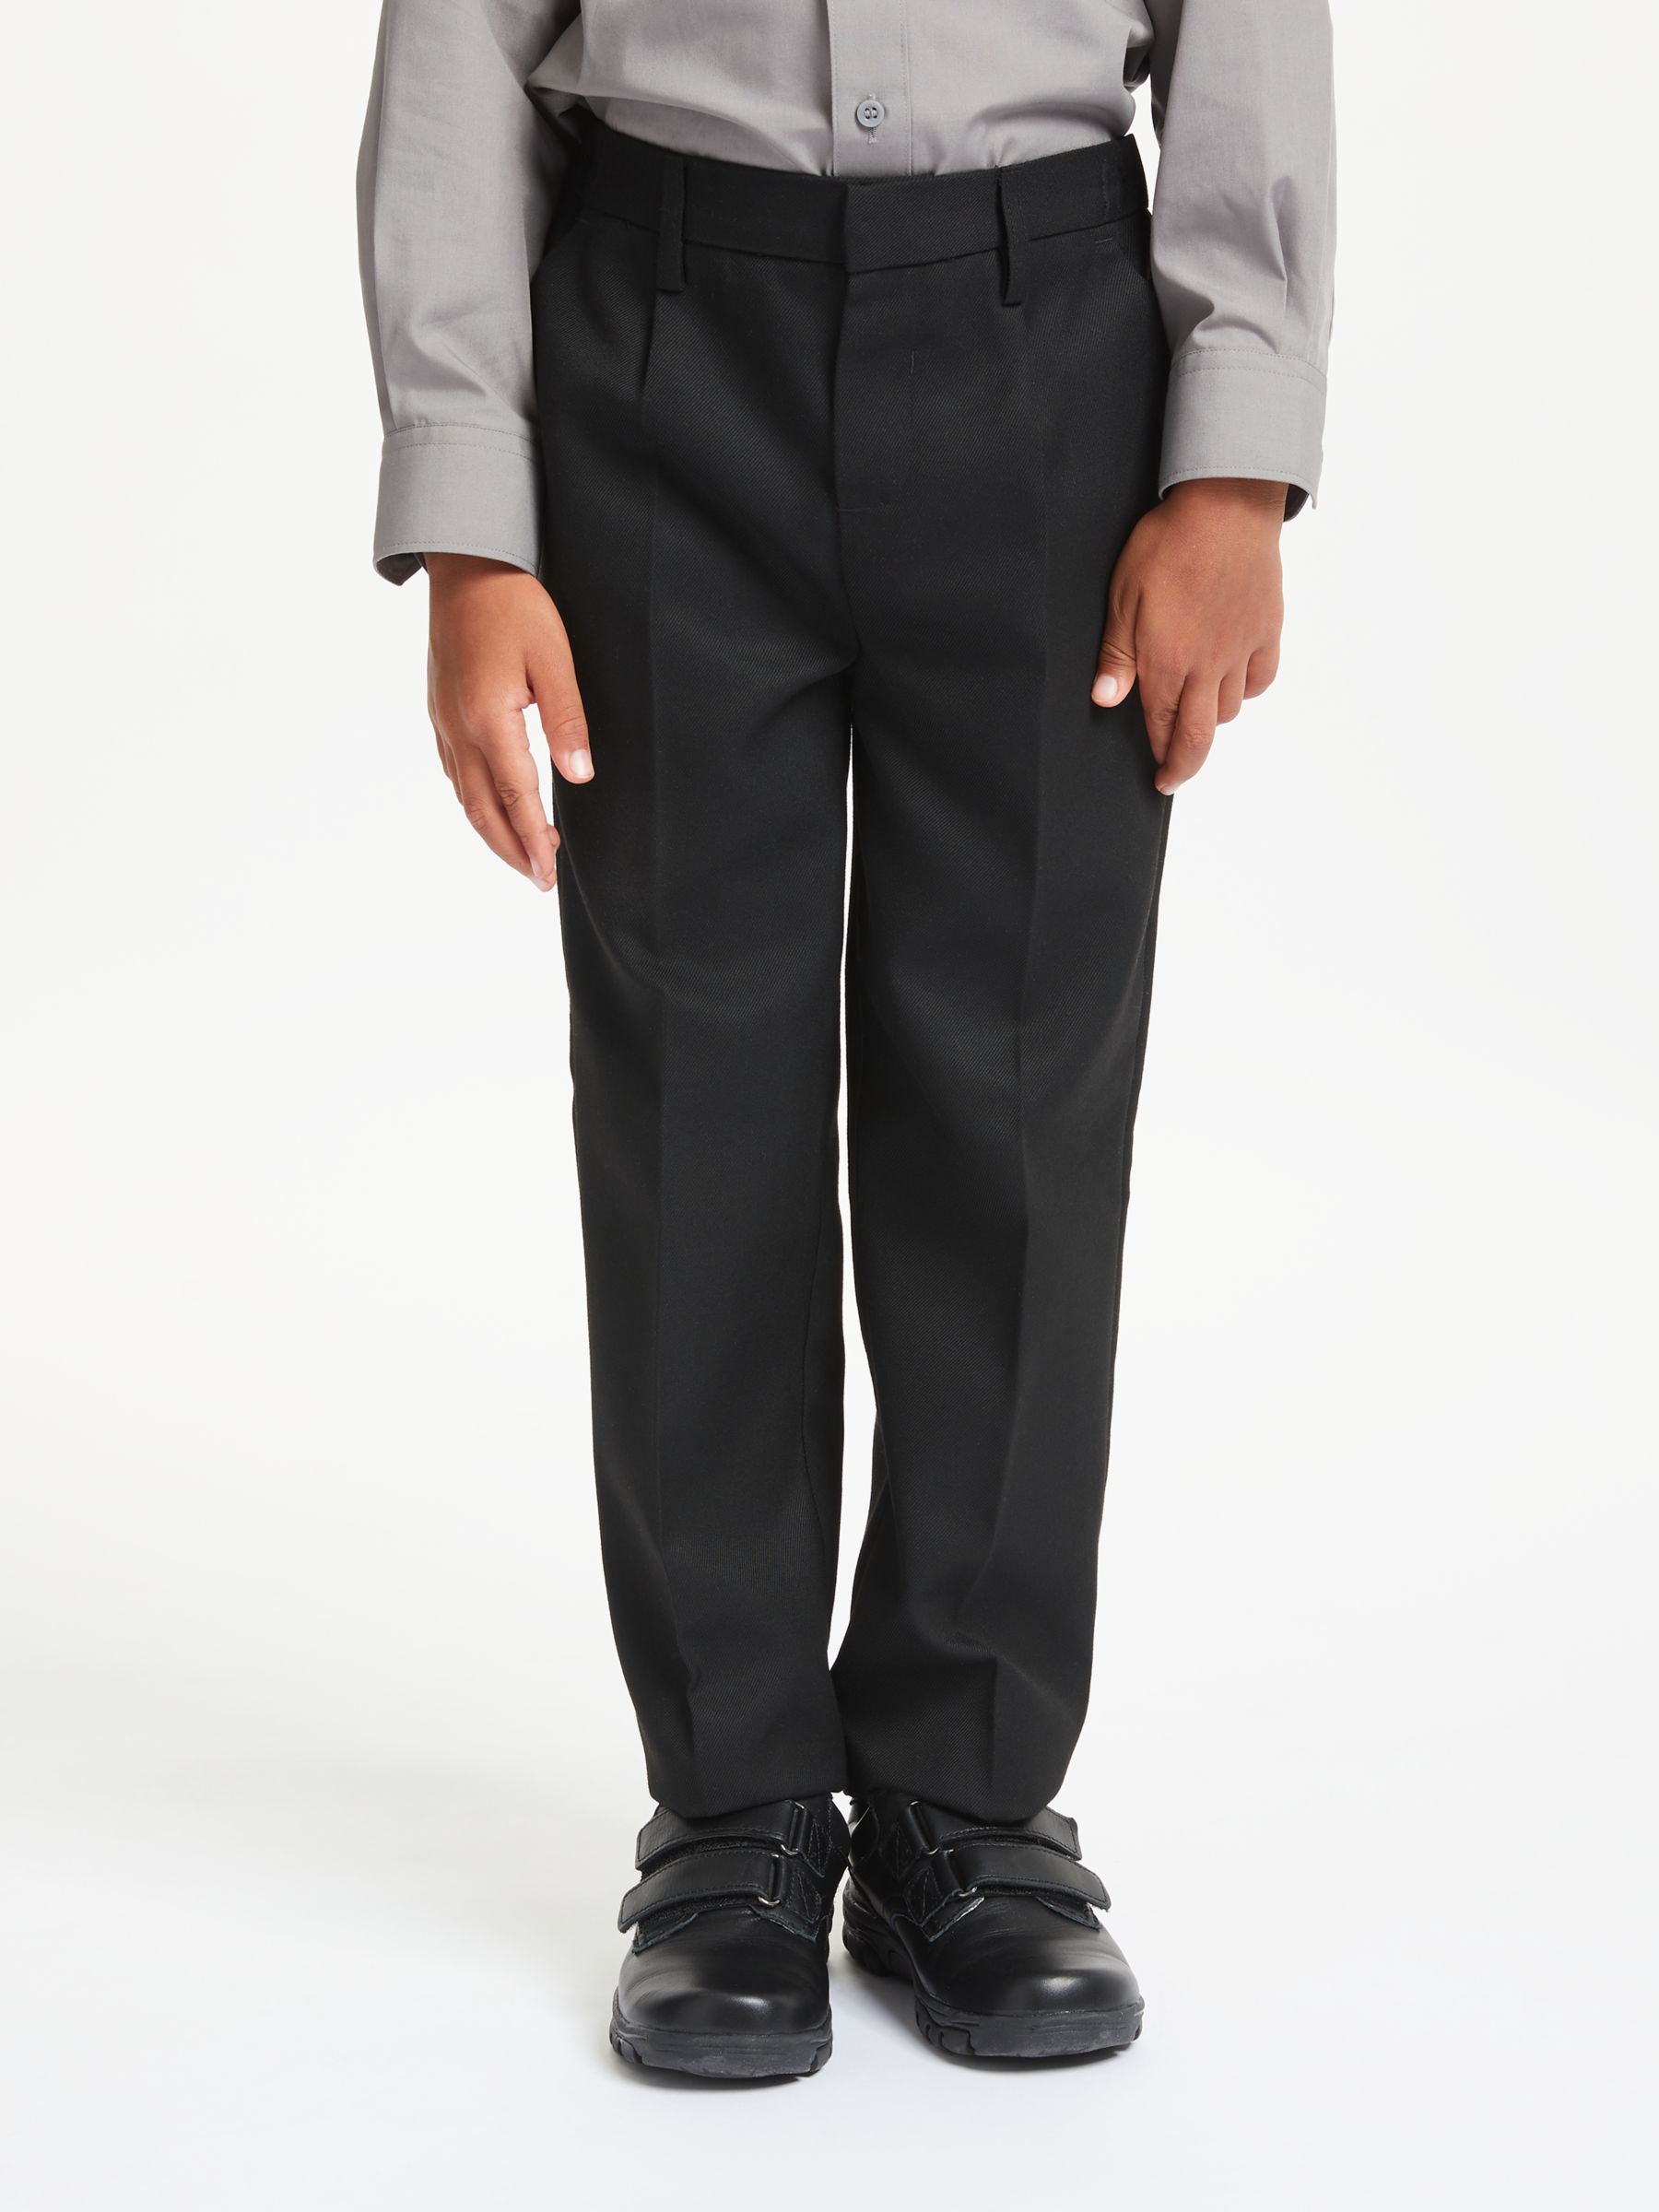 John Lewis & Partners Boys' Adjustable Waist Regular Fit School Trousers